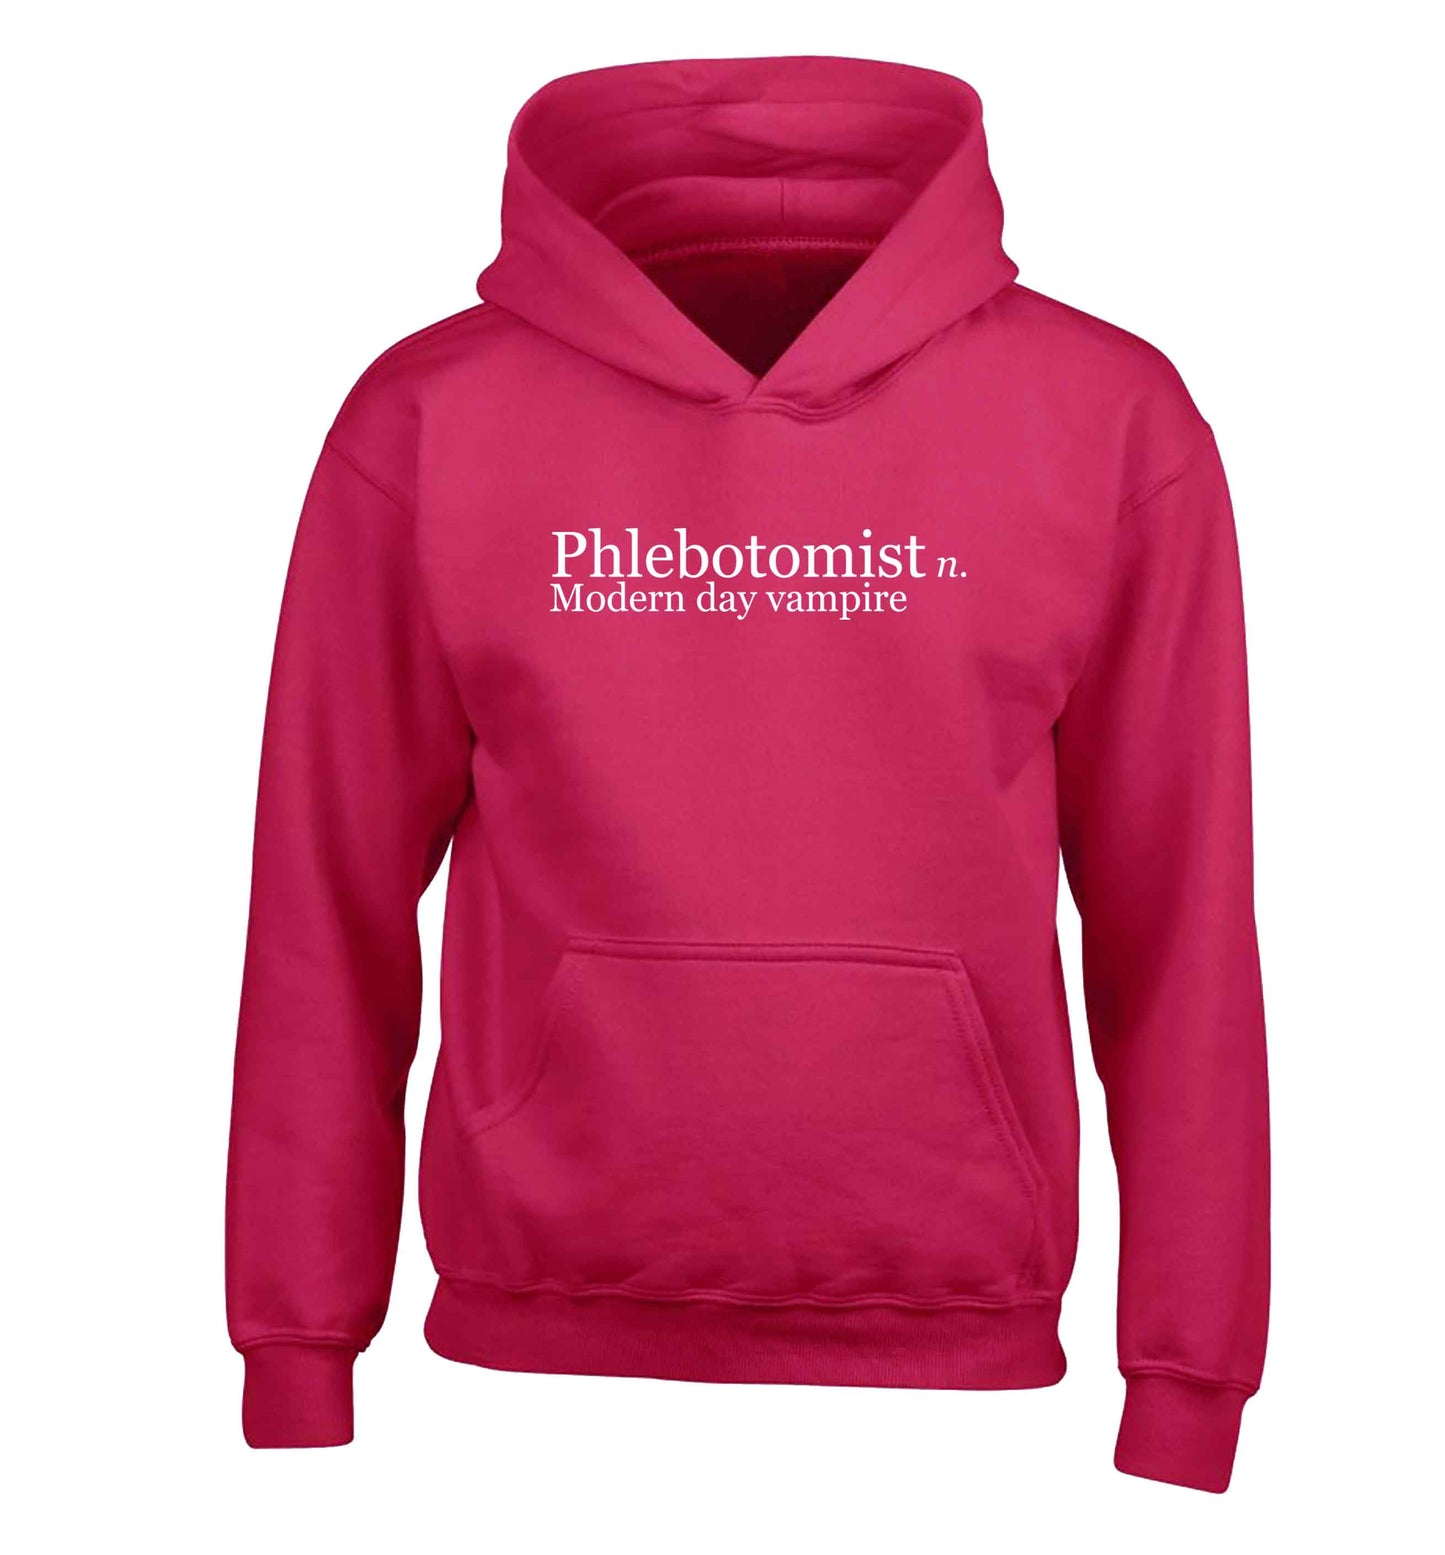 Phlebotomist - Modern day vampire children's pink hoodie 12-13 Years